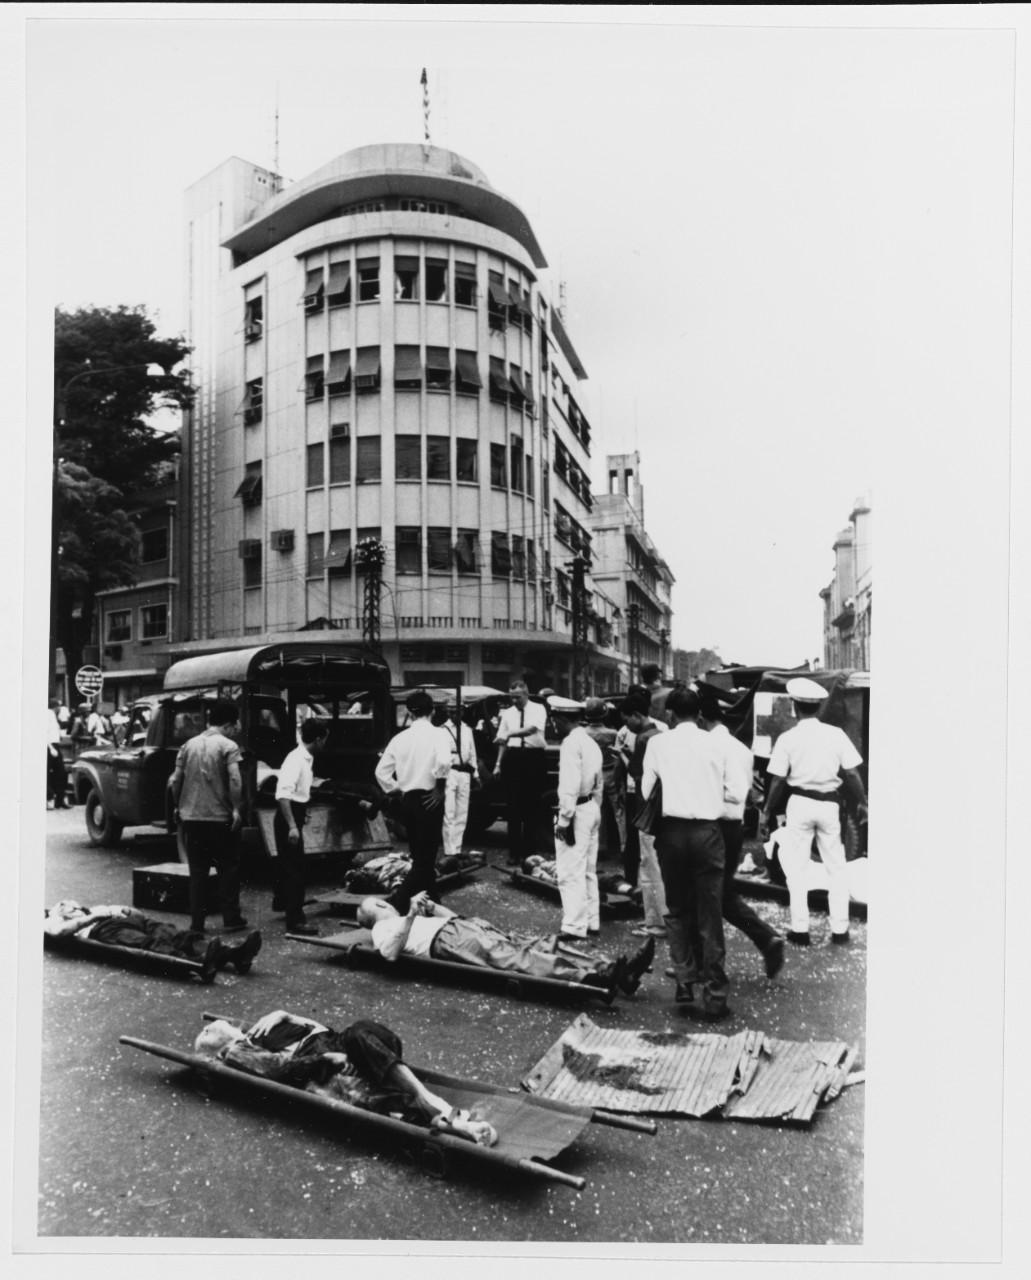 Bombing of the U.S. Embassy, Saigon, 30 March 1965.